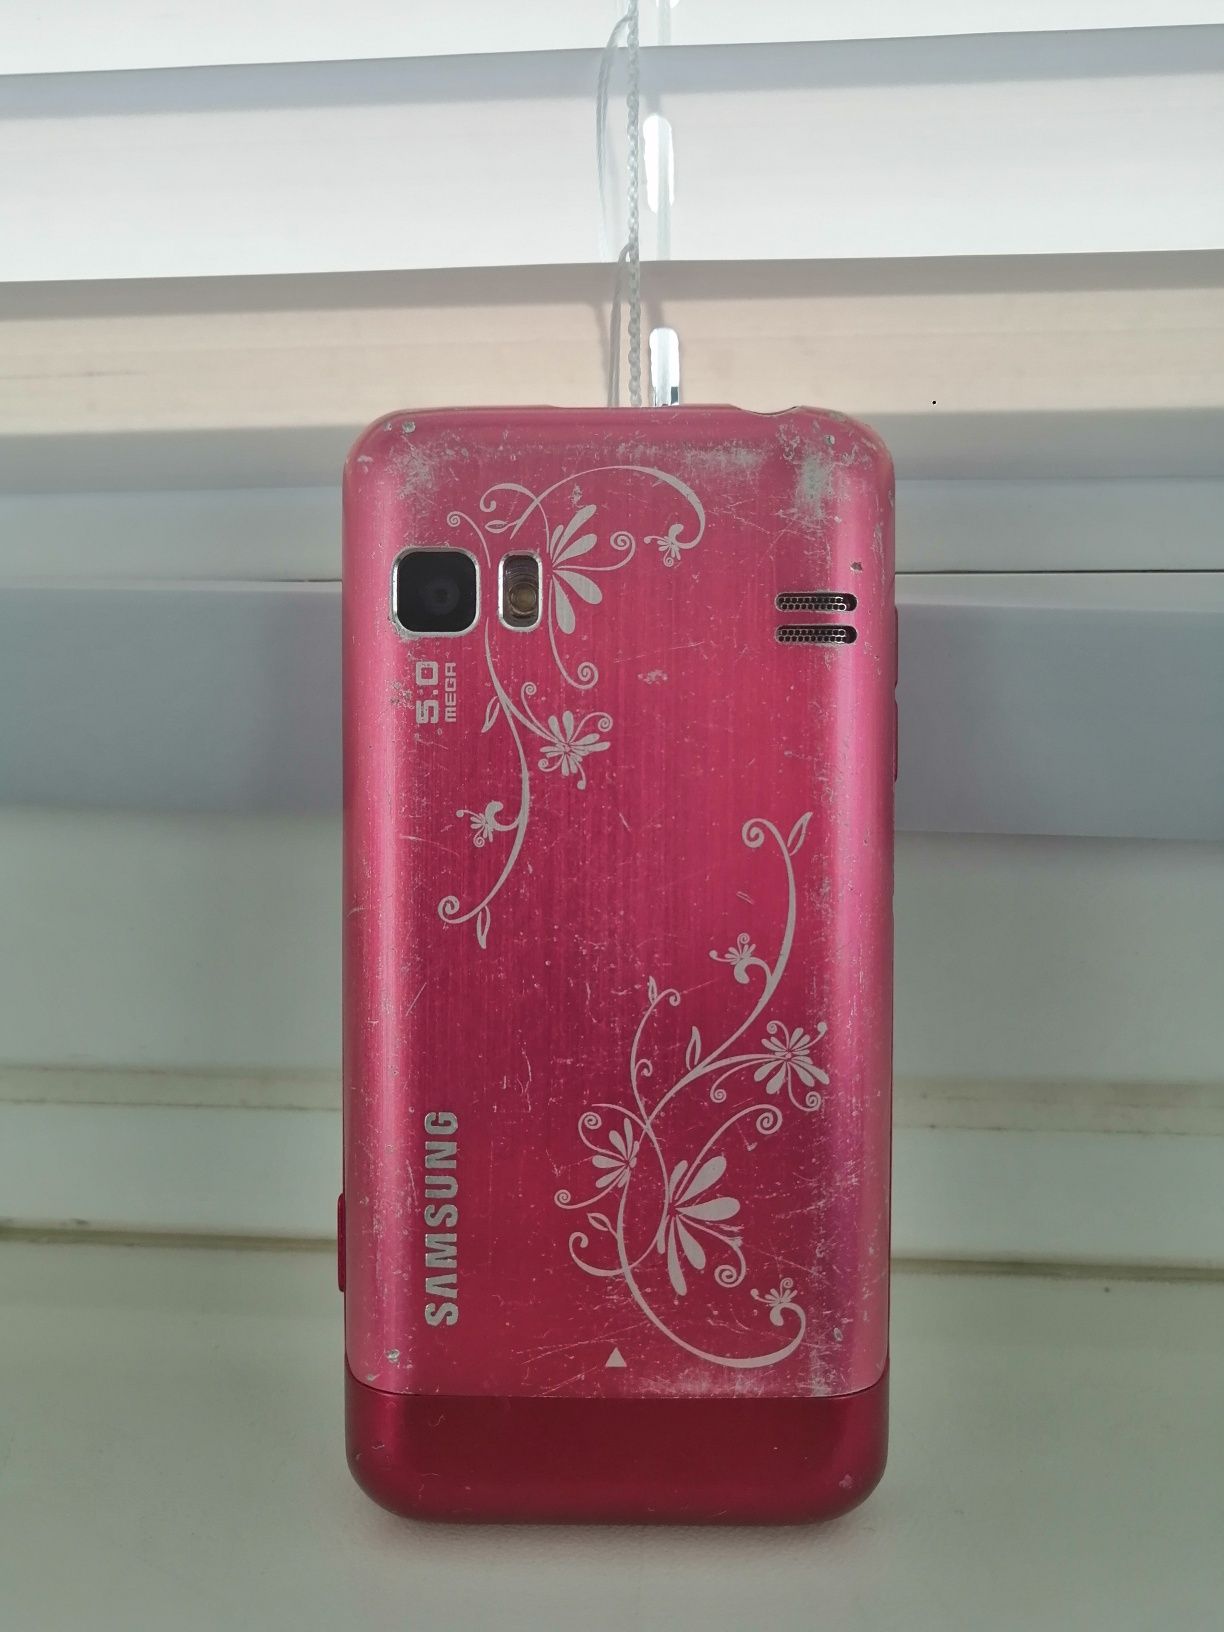 Samsung S7230 Garnet Red La Fleur

Подробнее на сайт